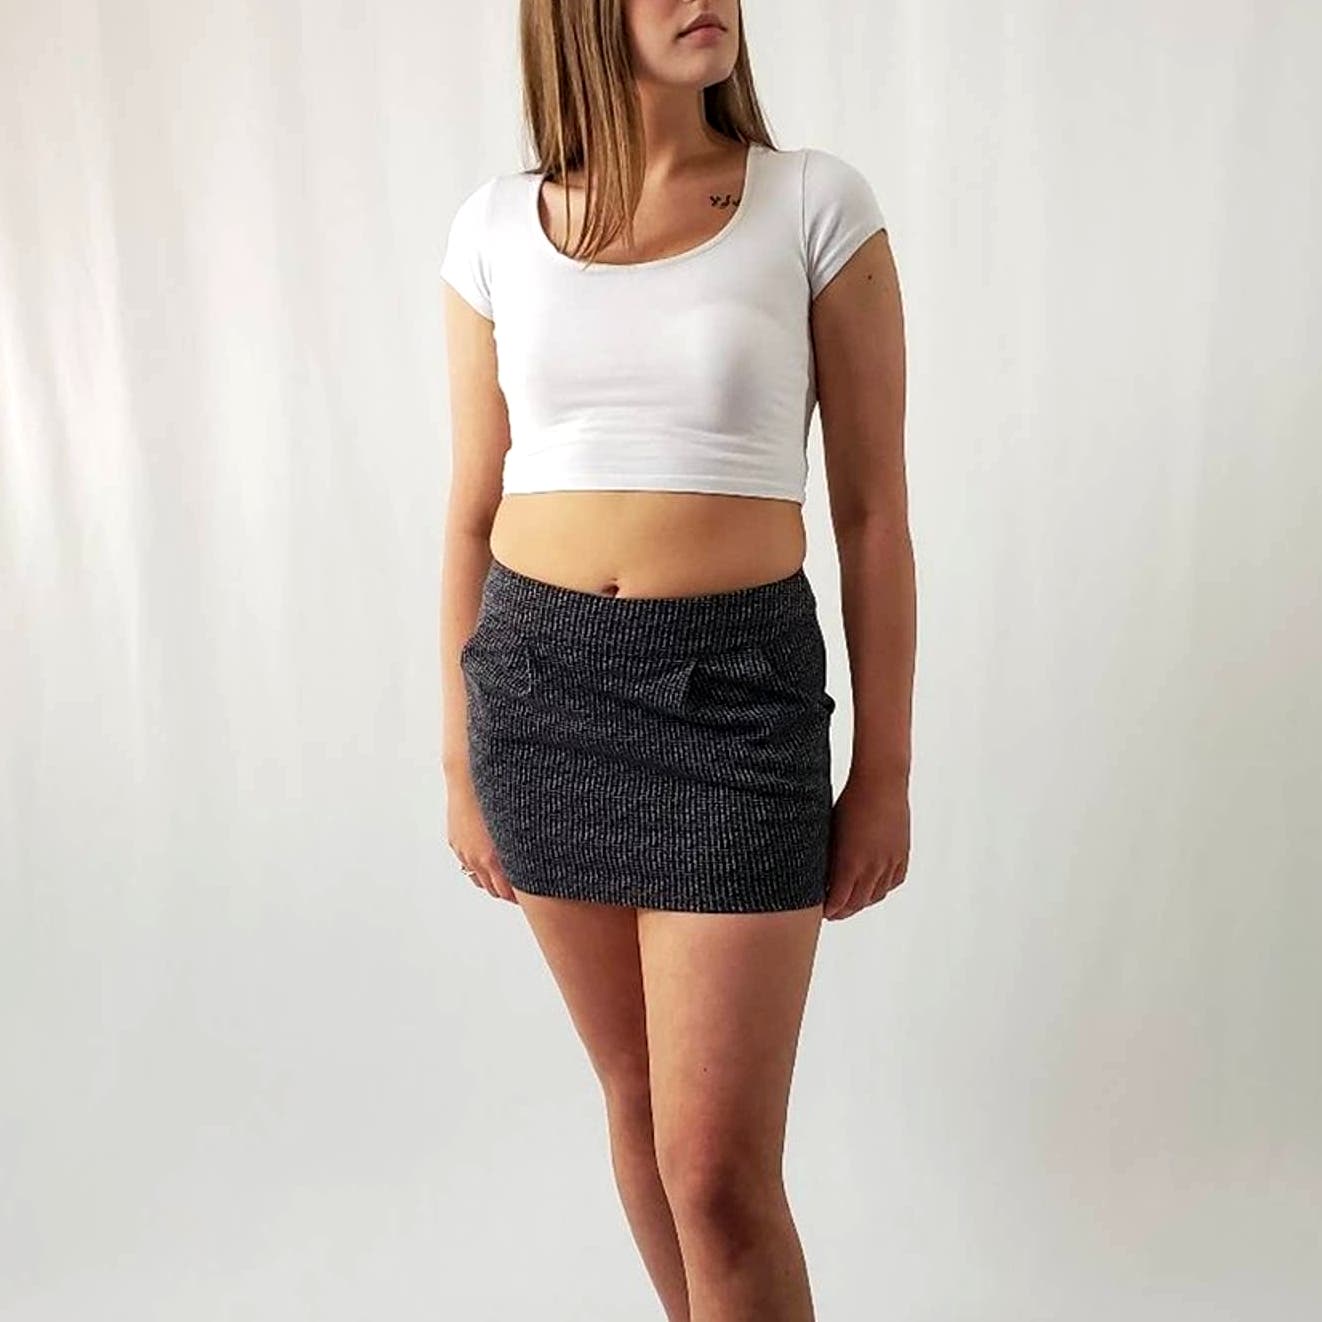 XXI Forever 21 Micro Mini Skirt - S